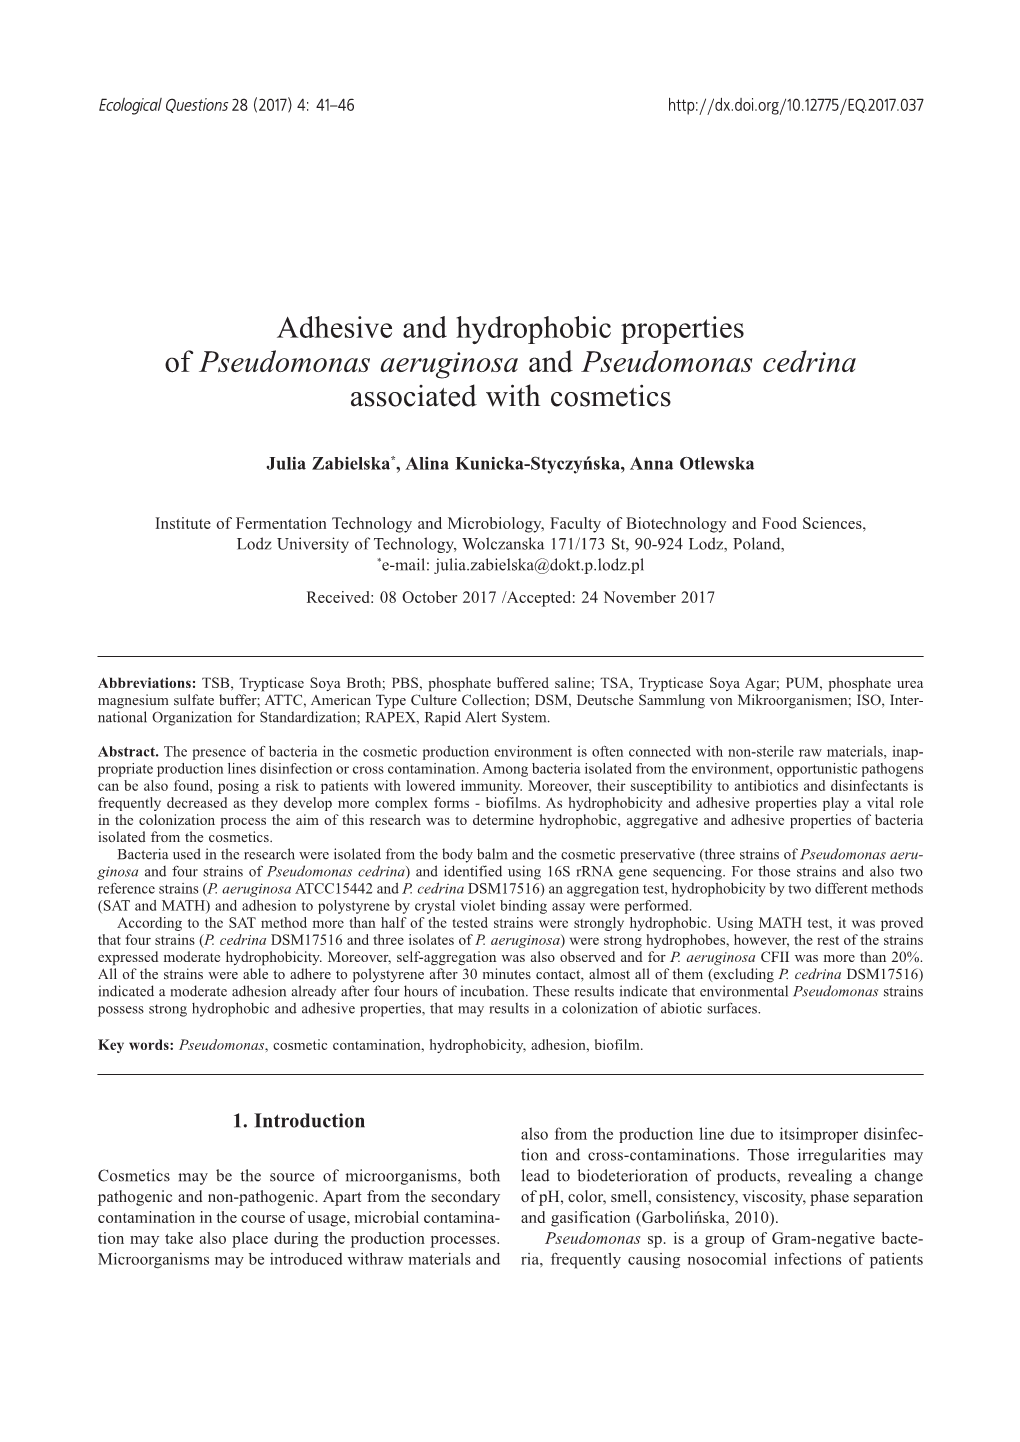 Adhesive and Hydrophobic Properties of Pseudomonas Aeruginosa and Pseudomonas Cedrina Associated with Cosmetics